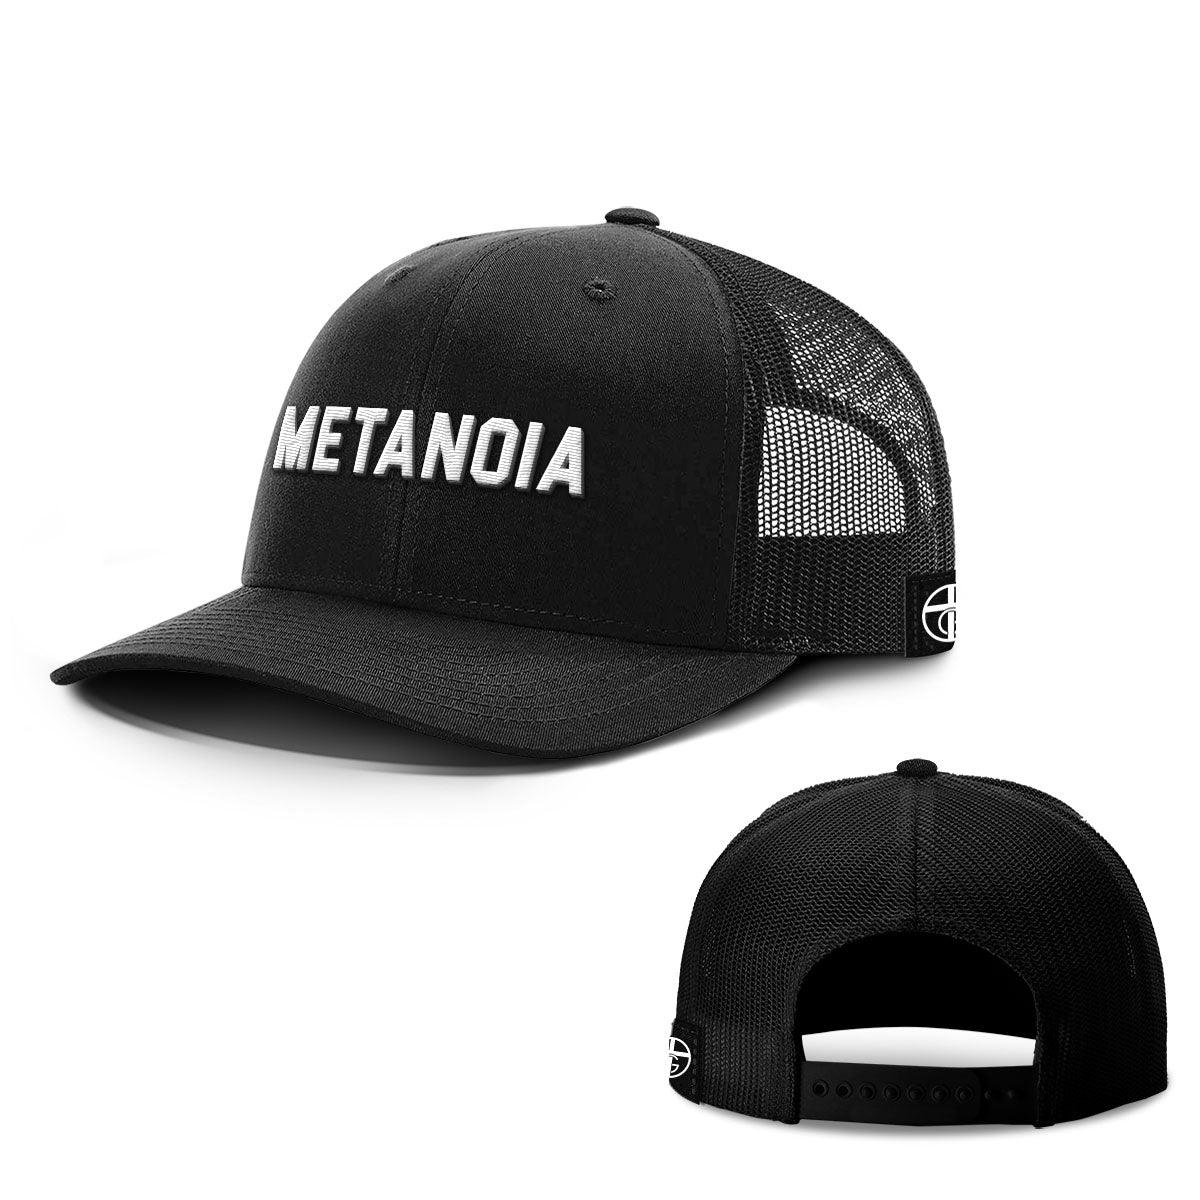 Metanoia Hats - Our True God